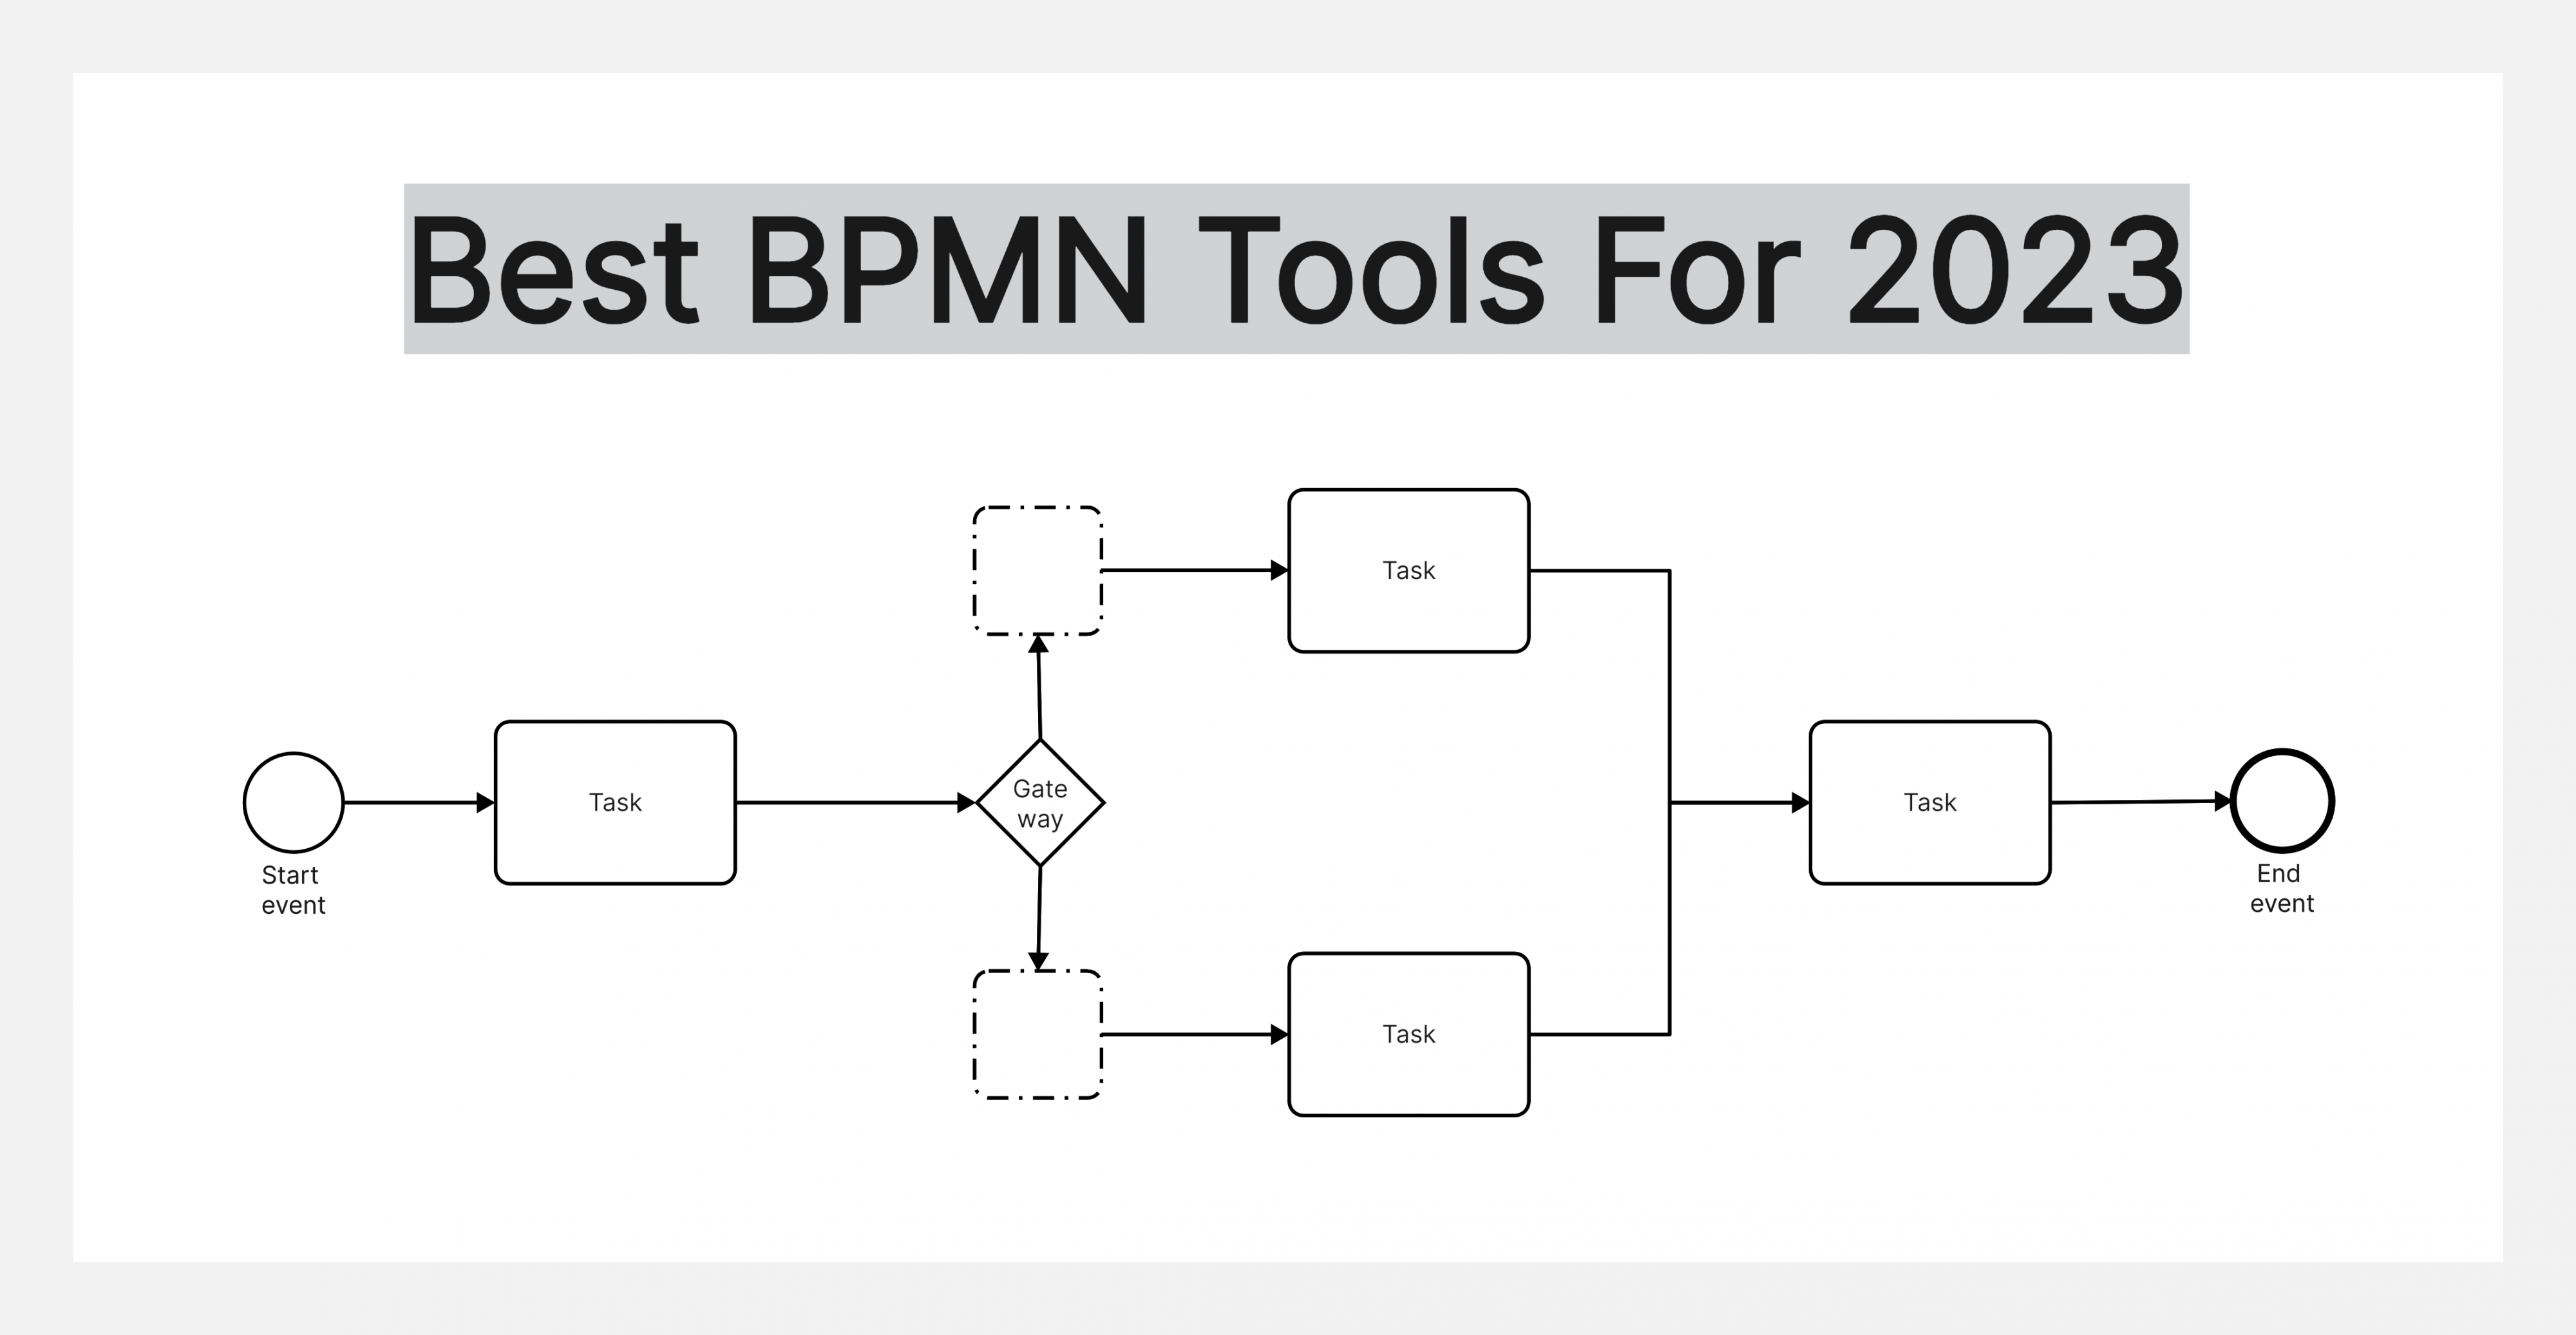 Best BPMN Tools For 2023